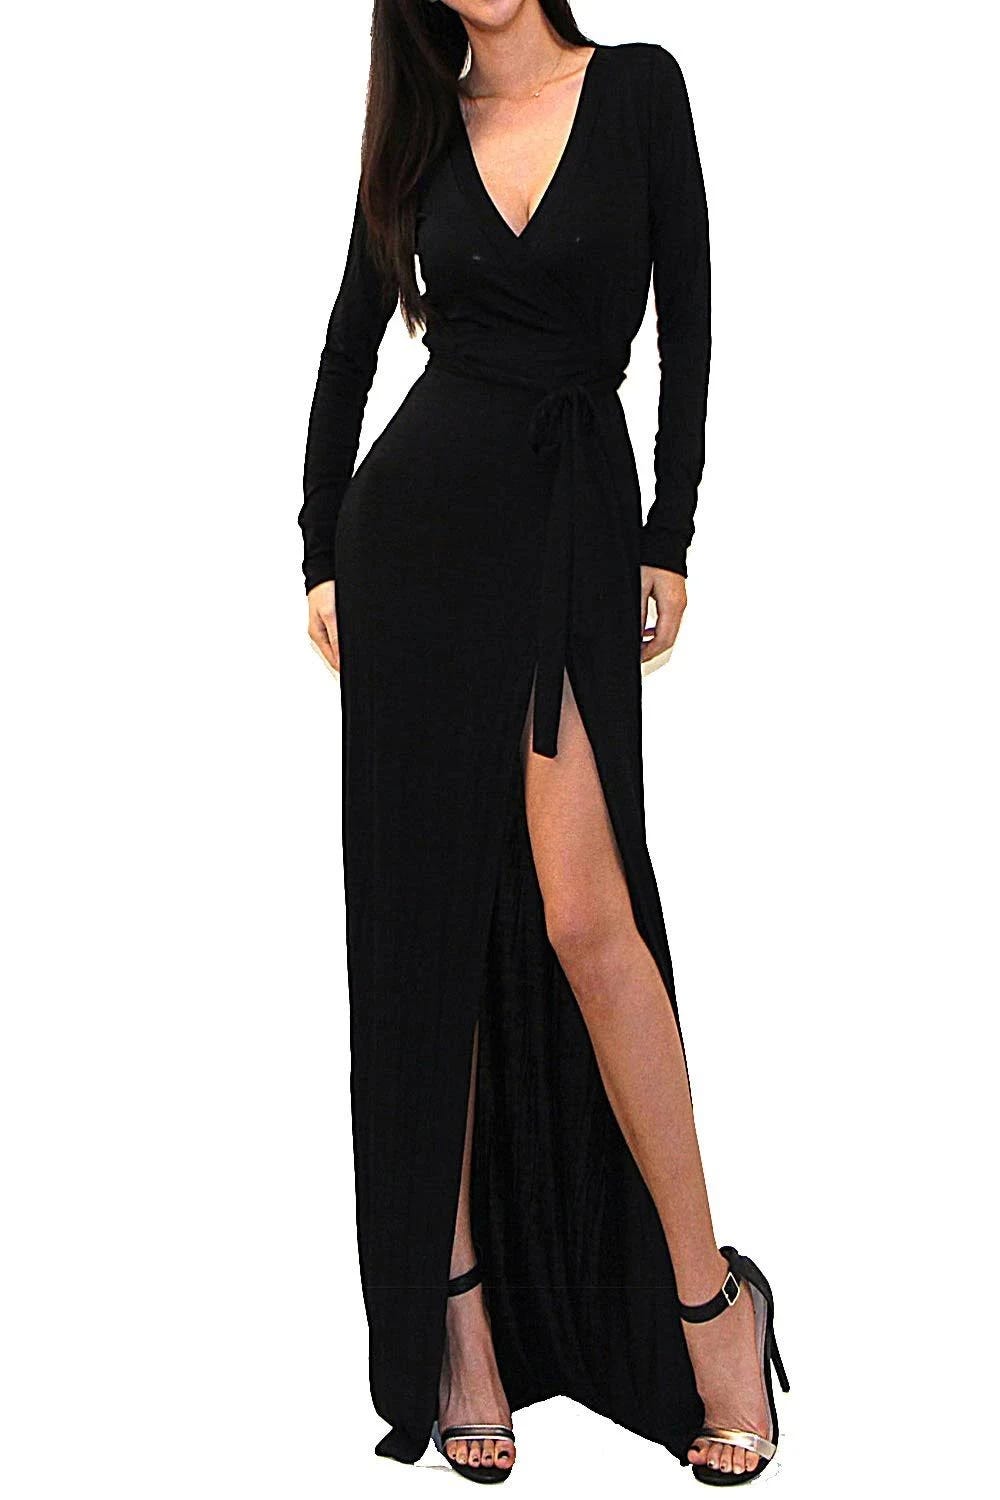 Stylish Black Tulip Wrap Maxi Dress for Cocktail Parties (Medium Size) | Image